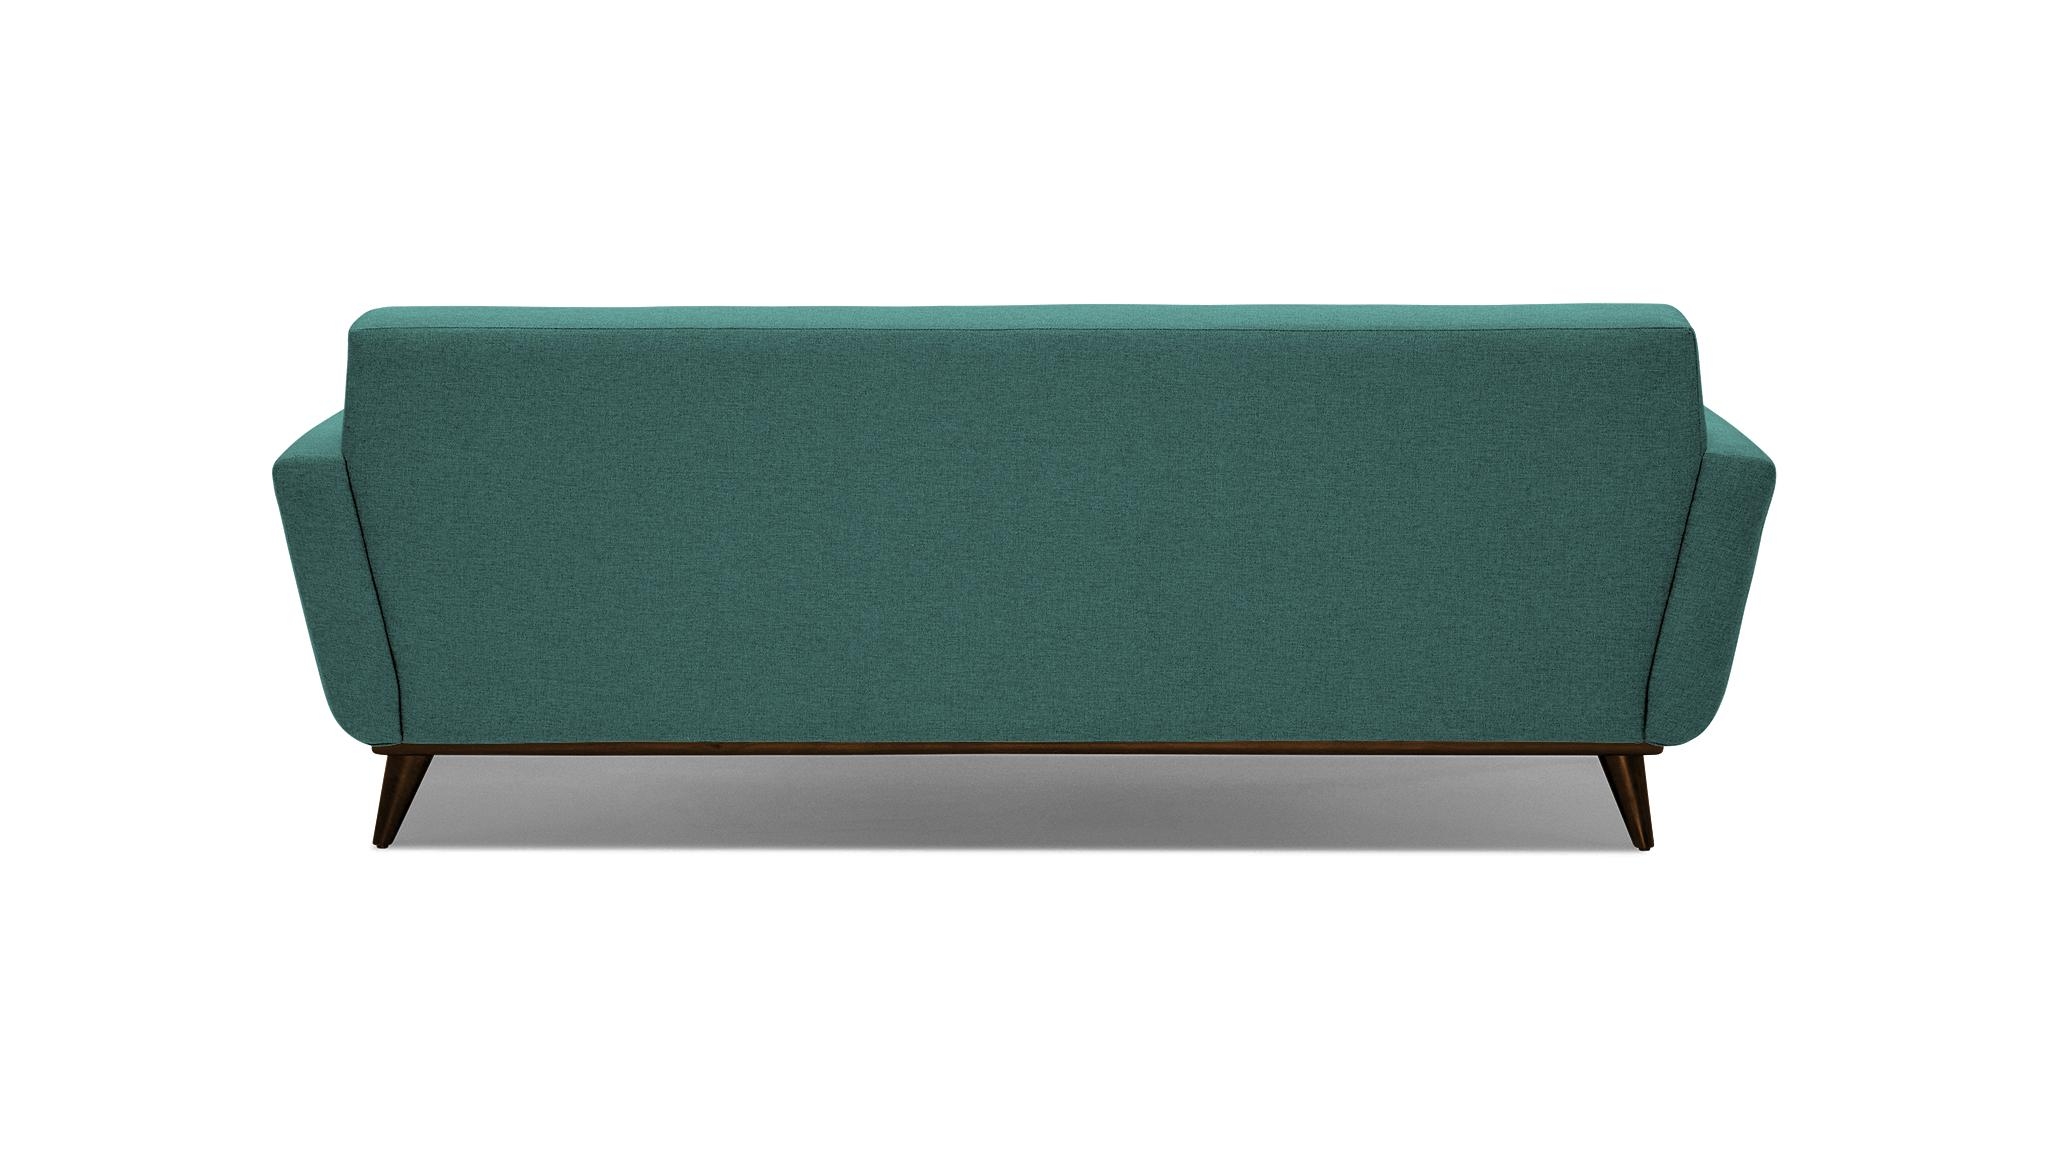 Blue Hughes Mid Century Modern Sofa - Prime Peacock - Mocha - Image 4